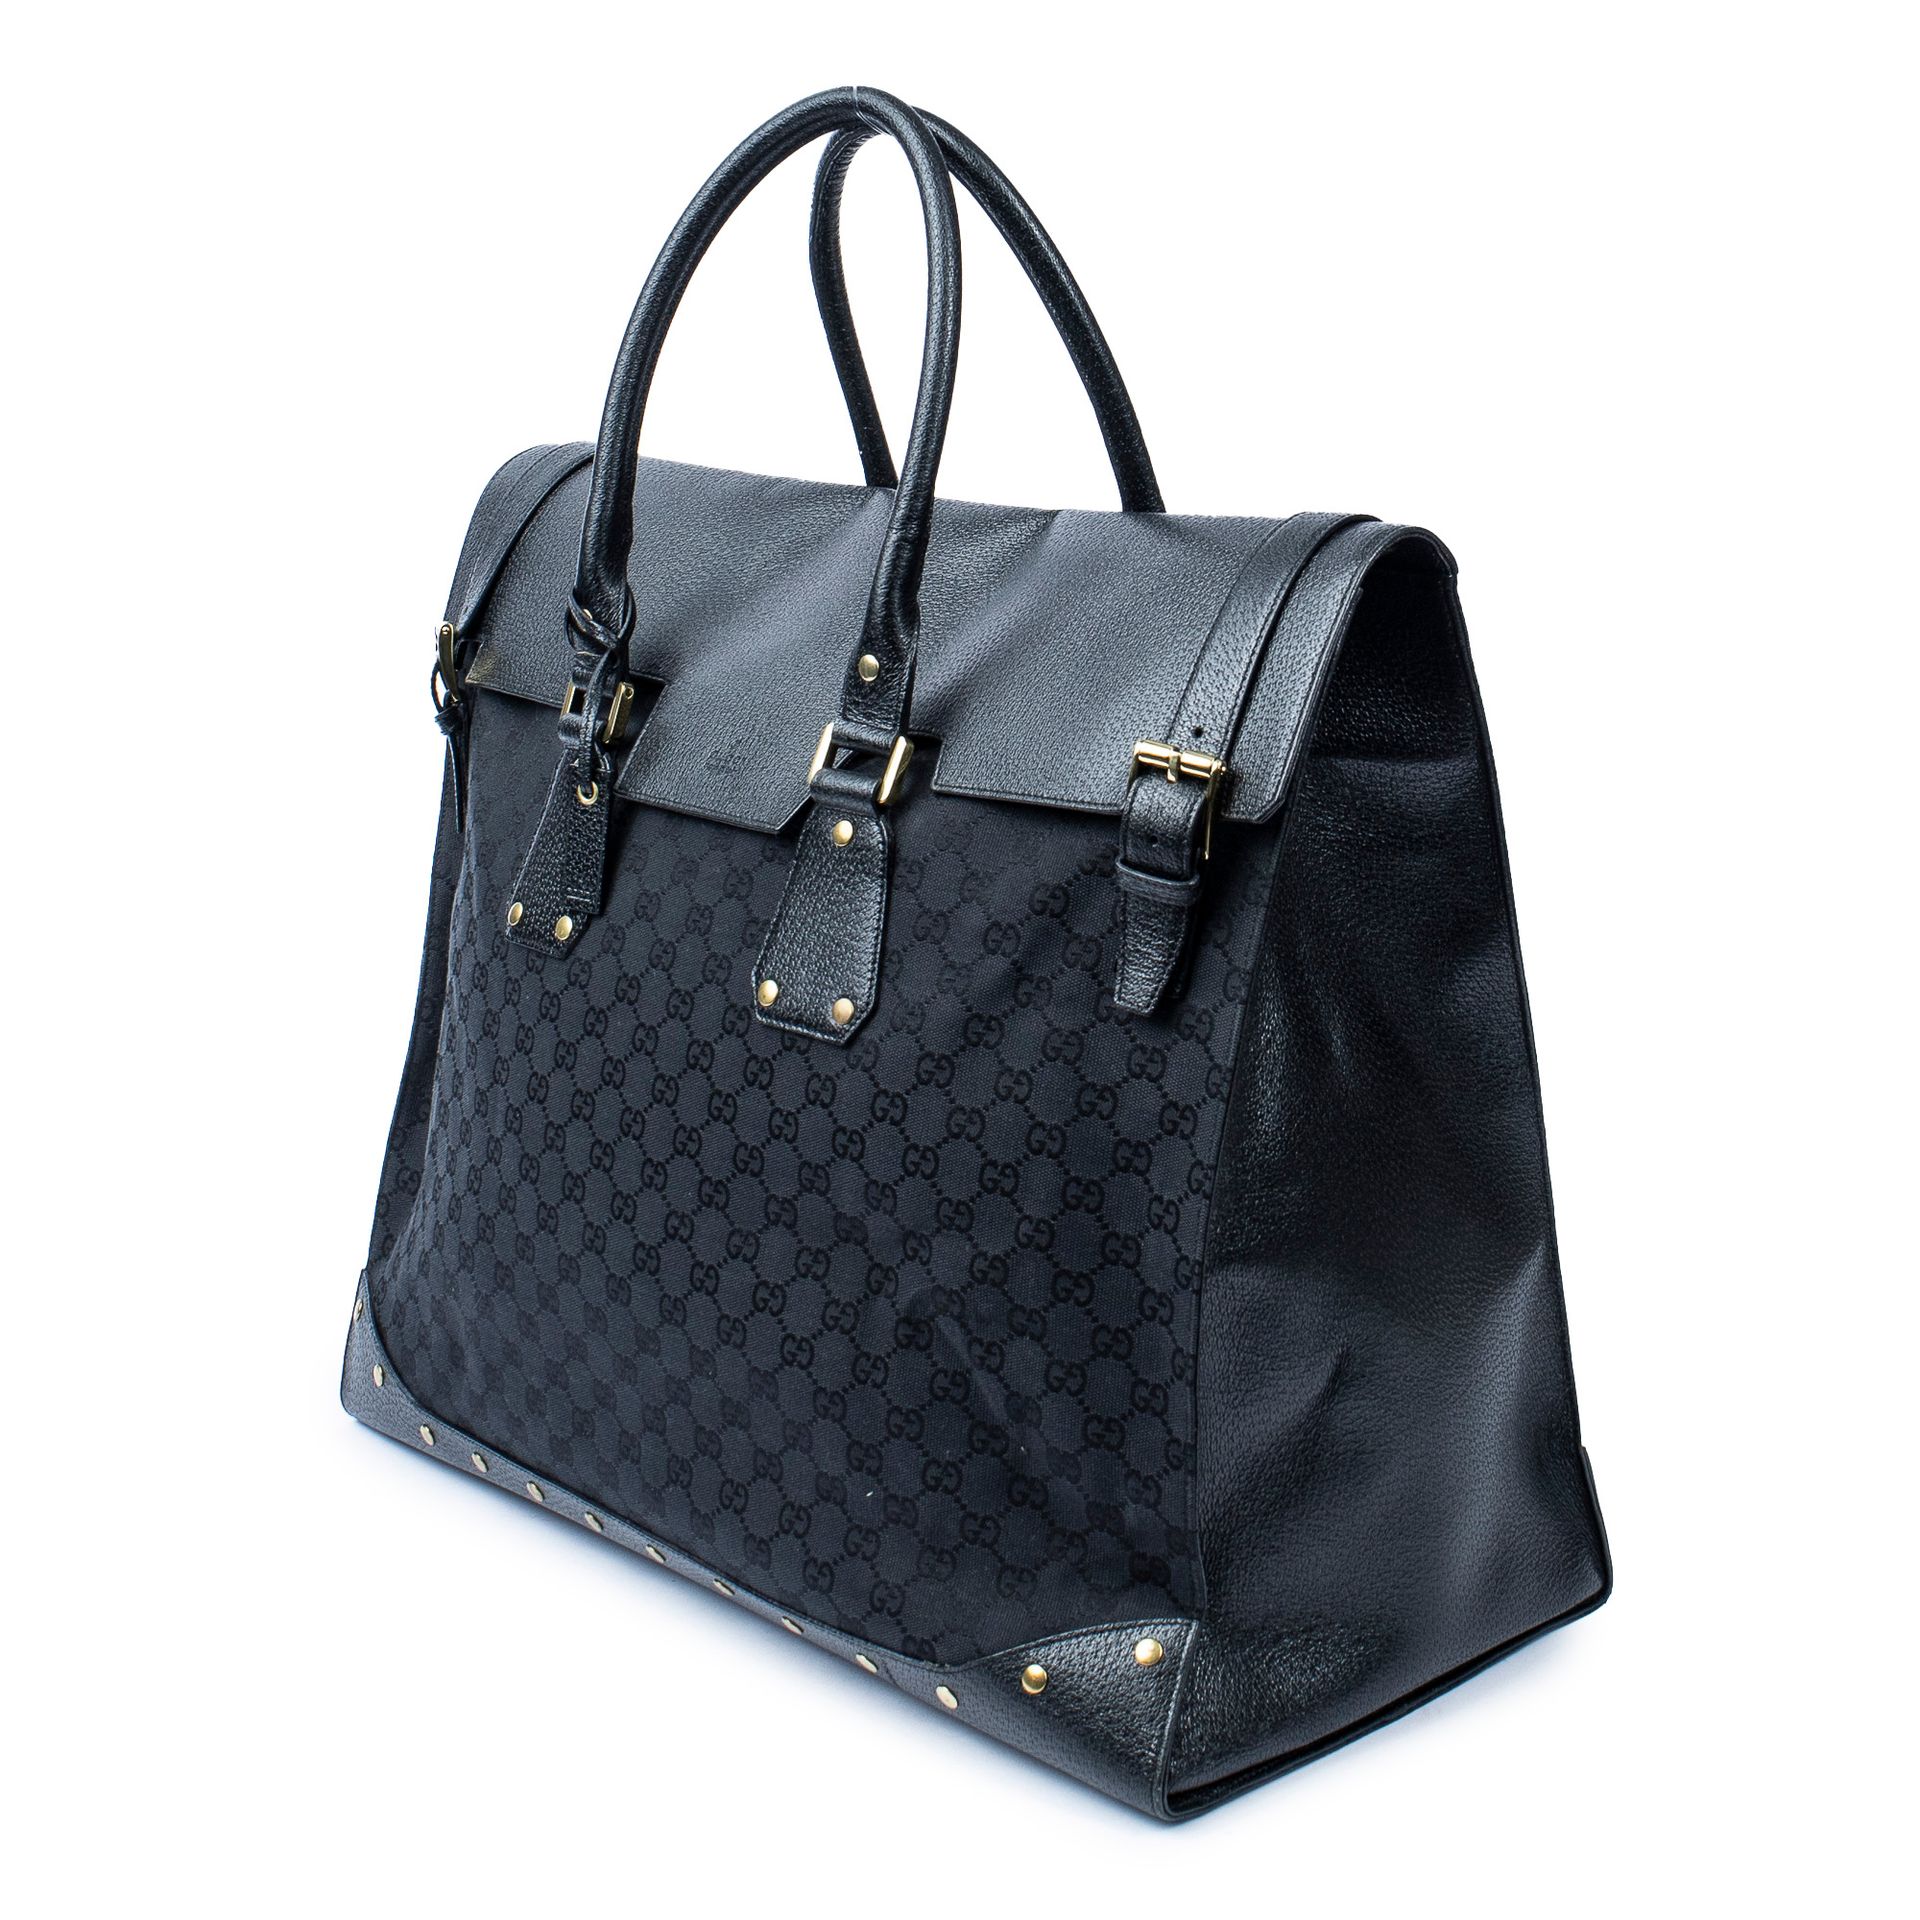 Gucci GUCCI- 旅行包，有字母图案的编织帆布和黑色粒面皮革 - 内部为黑色织物 - 金色金属首饰 - 两条带子带扣 - 原装袋 - 状态良好 - 50&hellip;